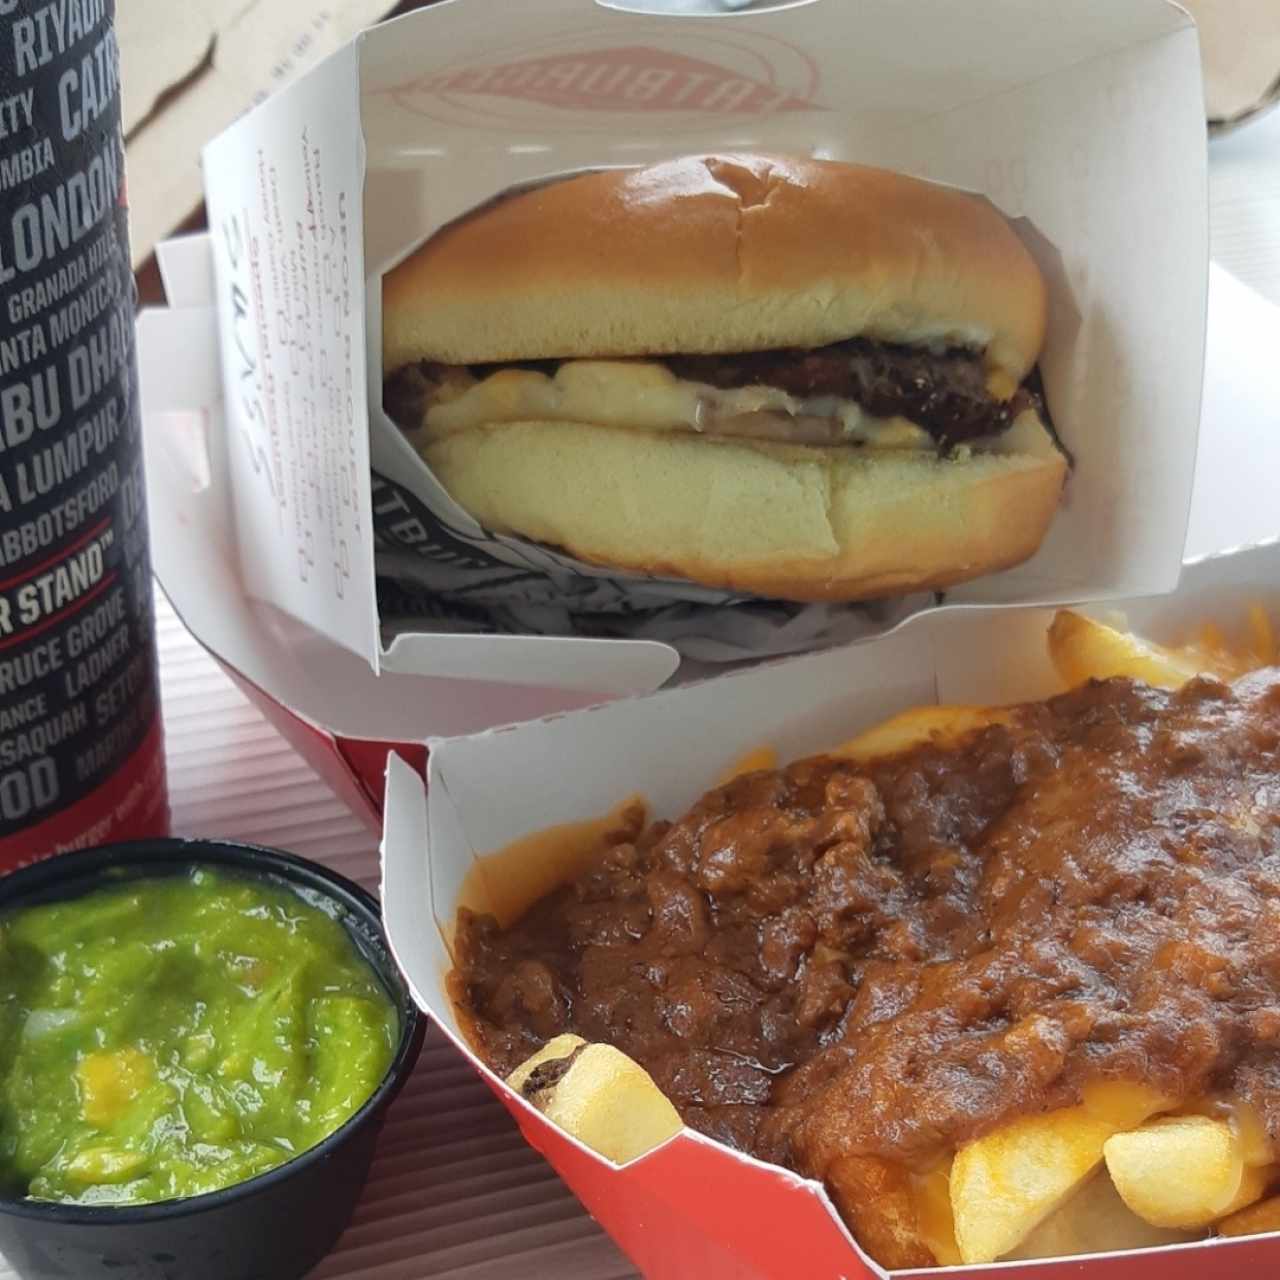 Mushroom Burger con Chili cheese fries